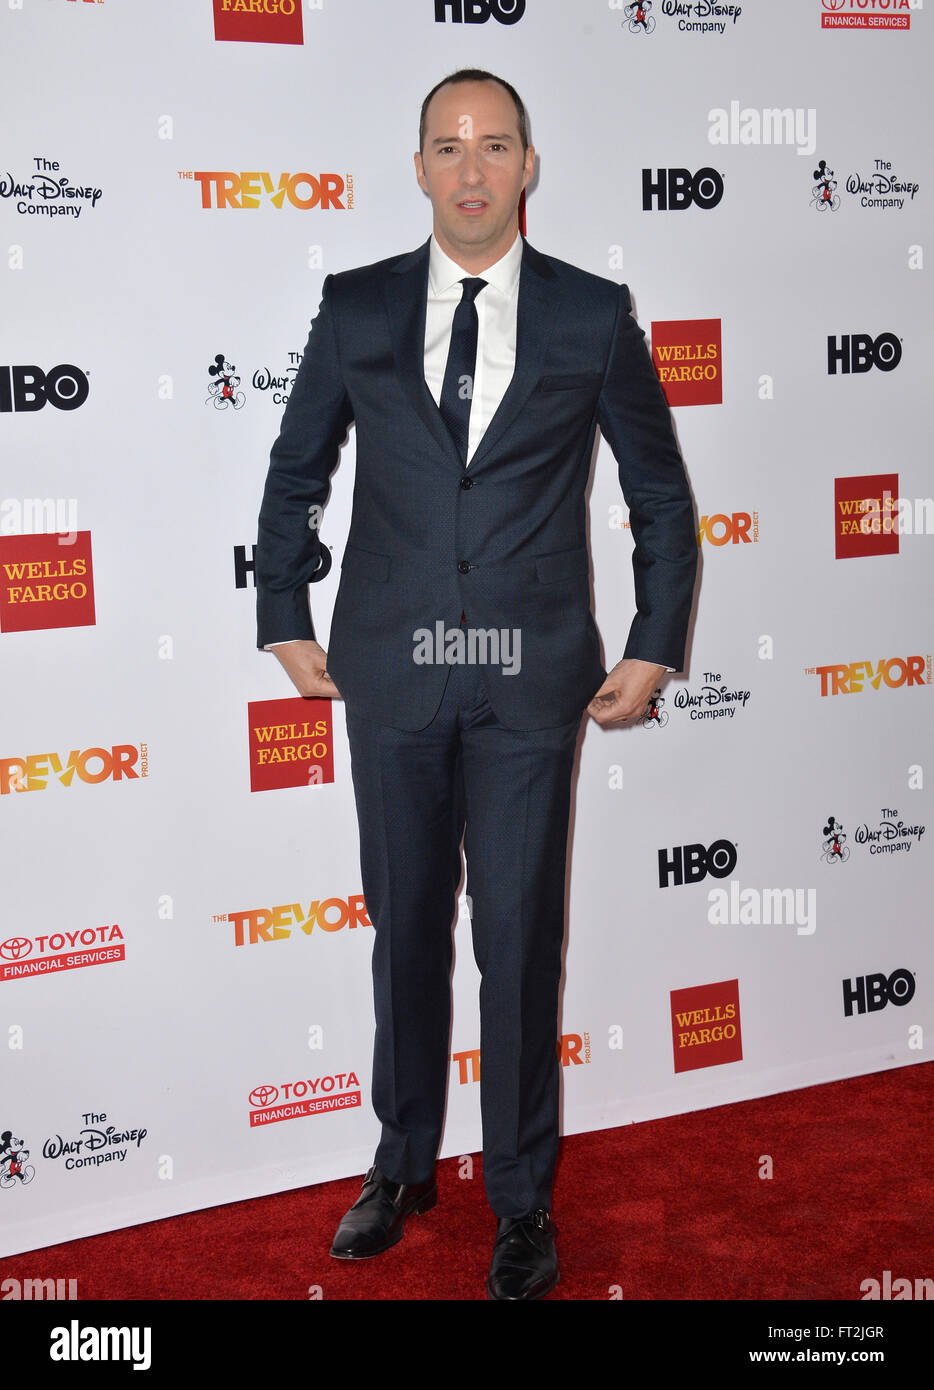 LOS ANGELES, CA - DECEMBER 6, 2015: Tony Hale at the 2015 TrevorLIVE Los Angeles Gala at the Hollywood Palladium. Stock Photo